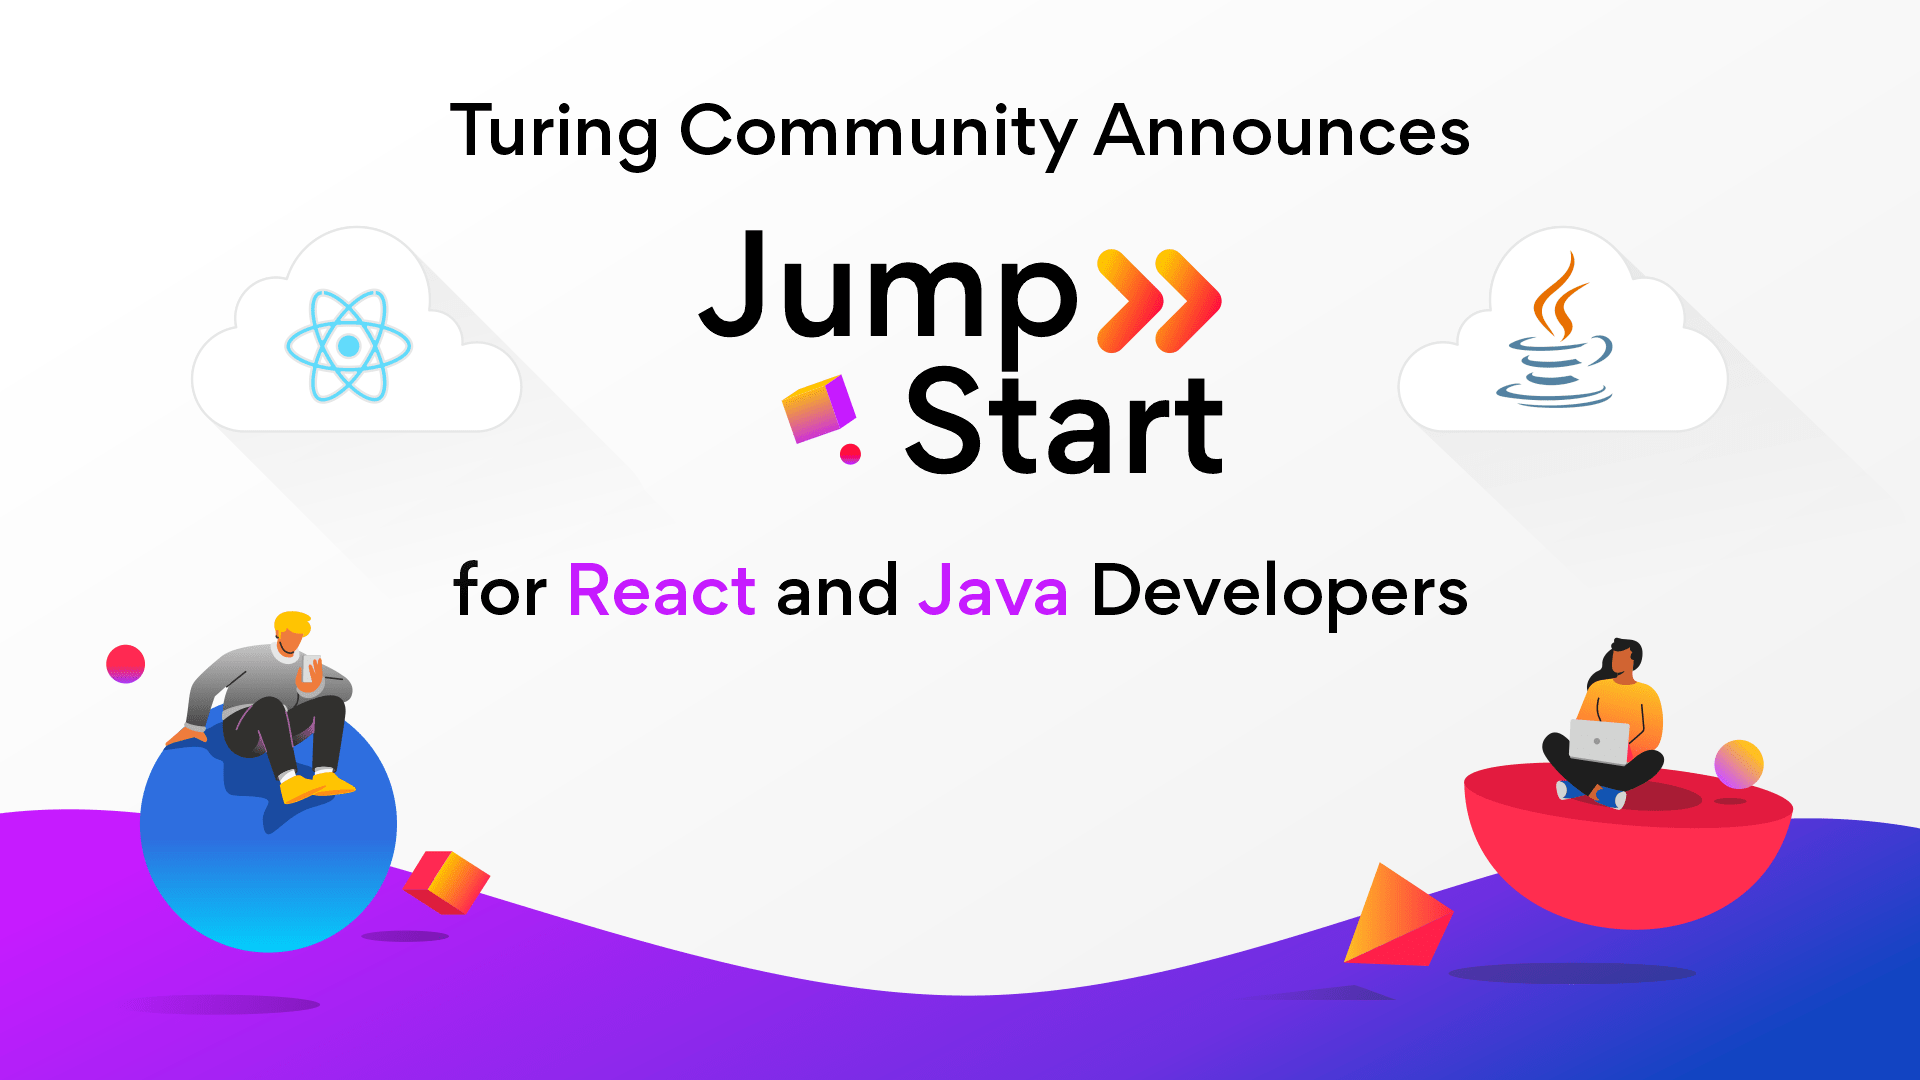 Turing Community's Jump Start